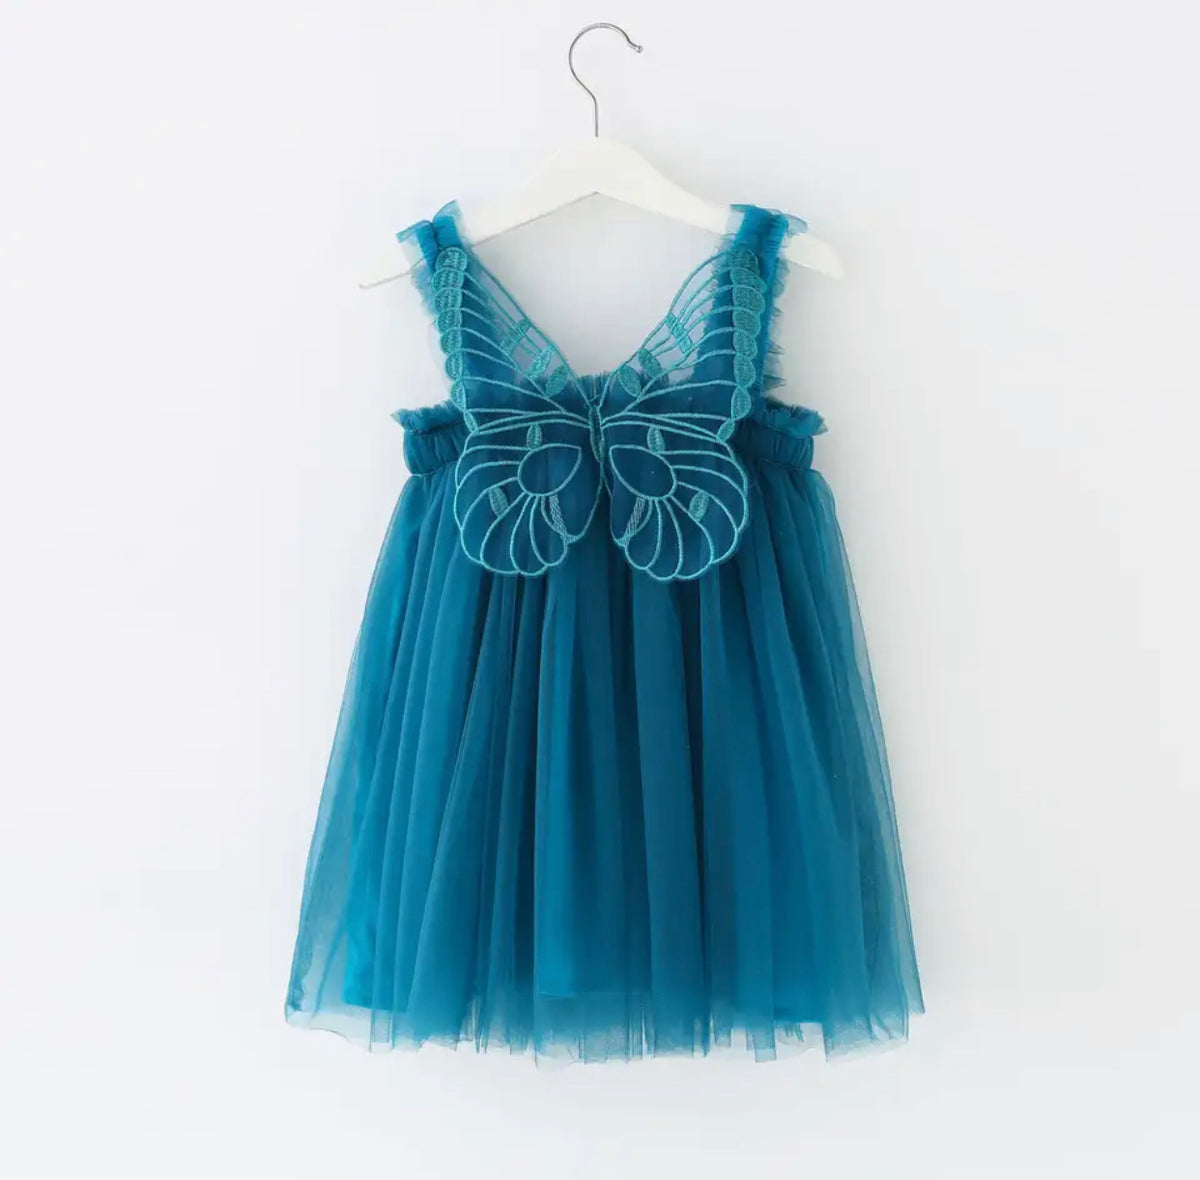 Petticoat Princess - Dark Teal Butterfly Dress